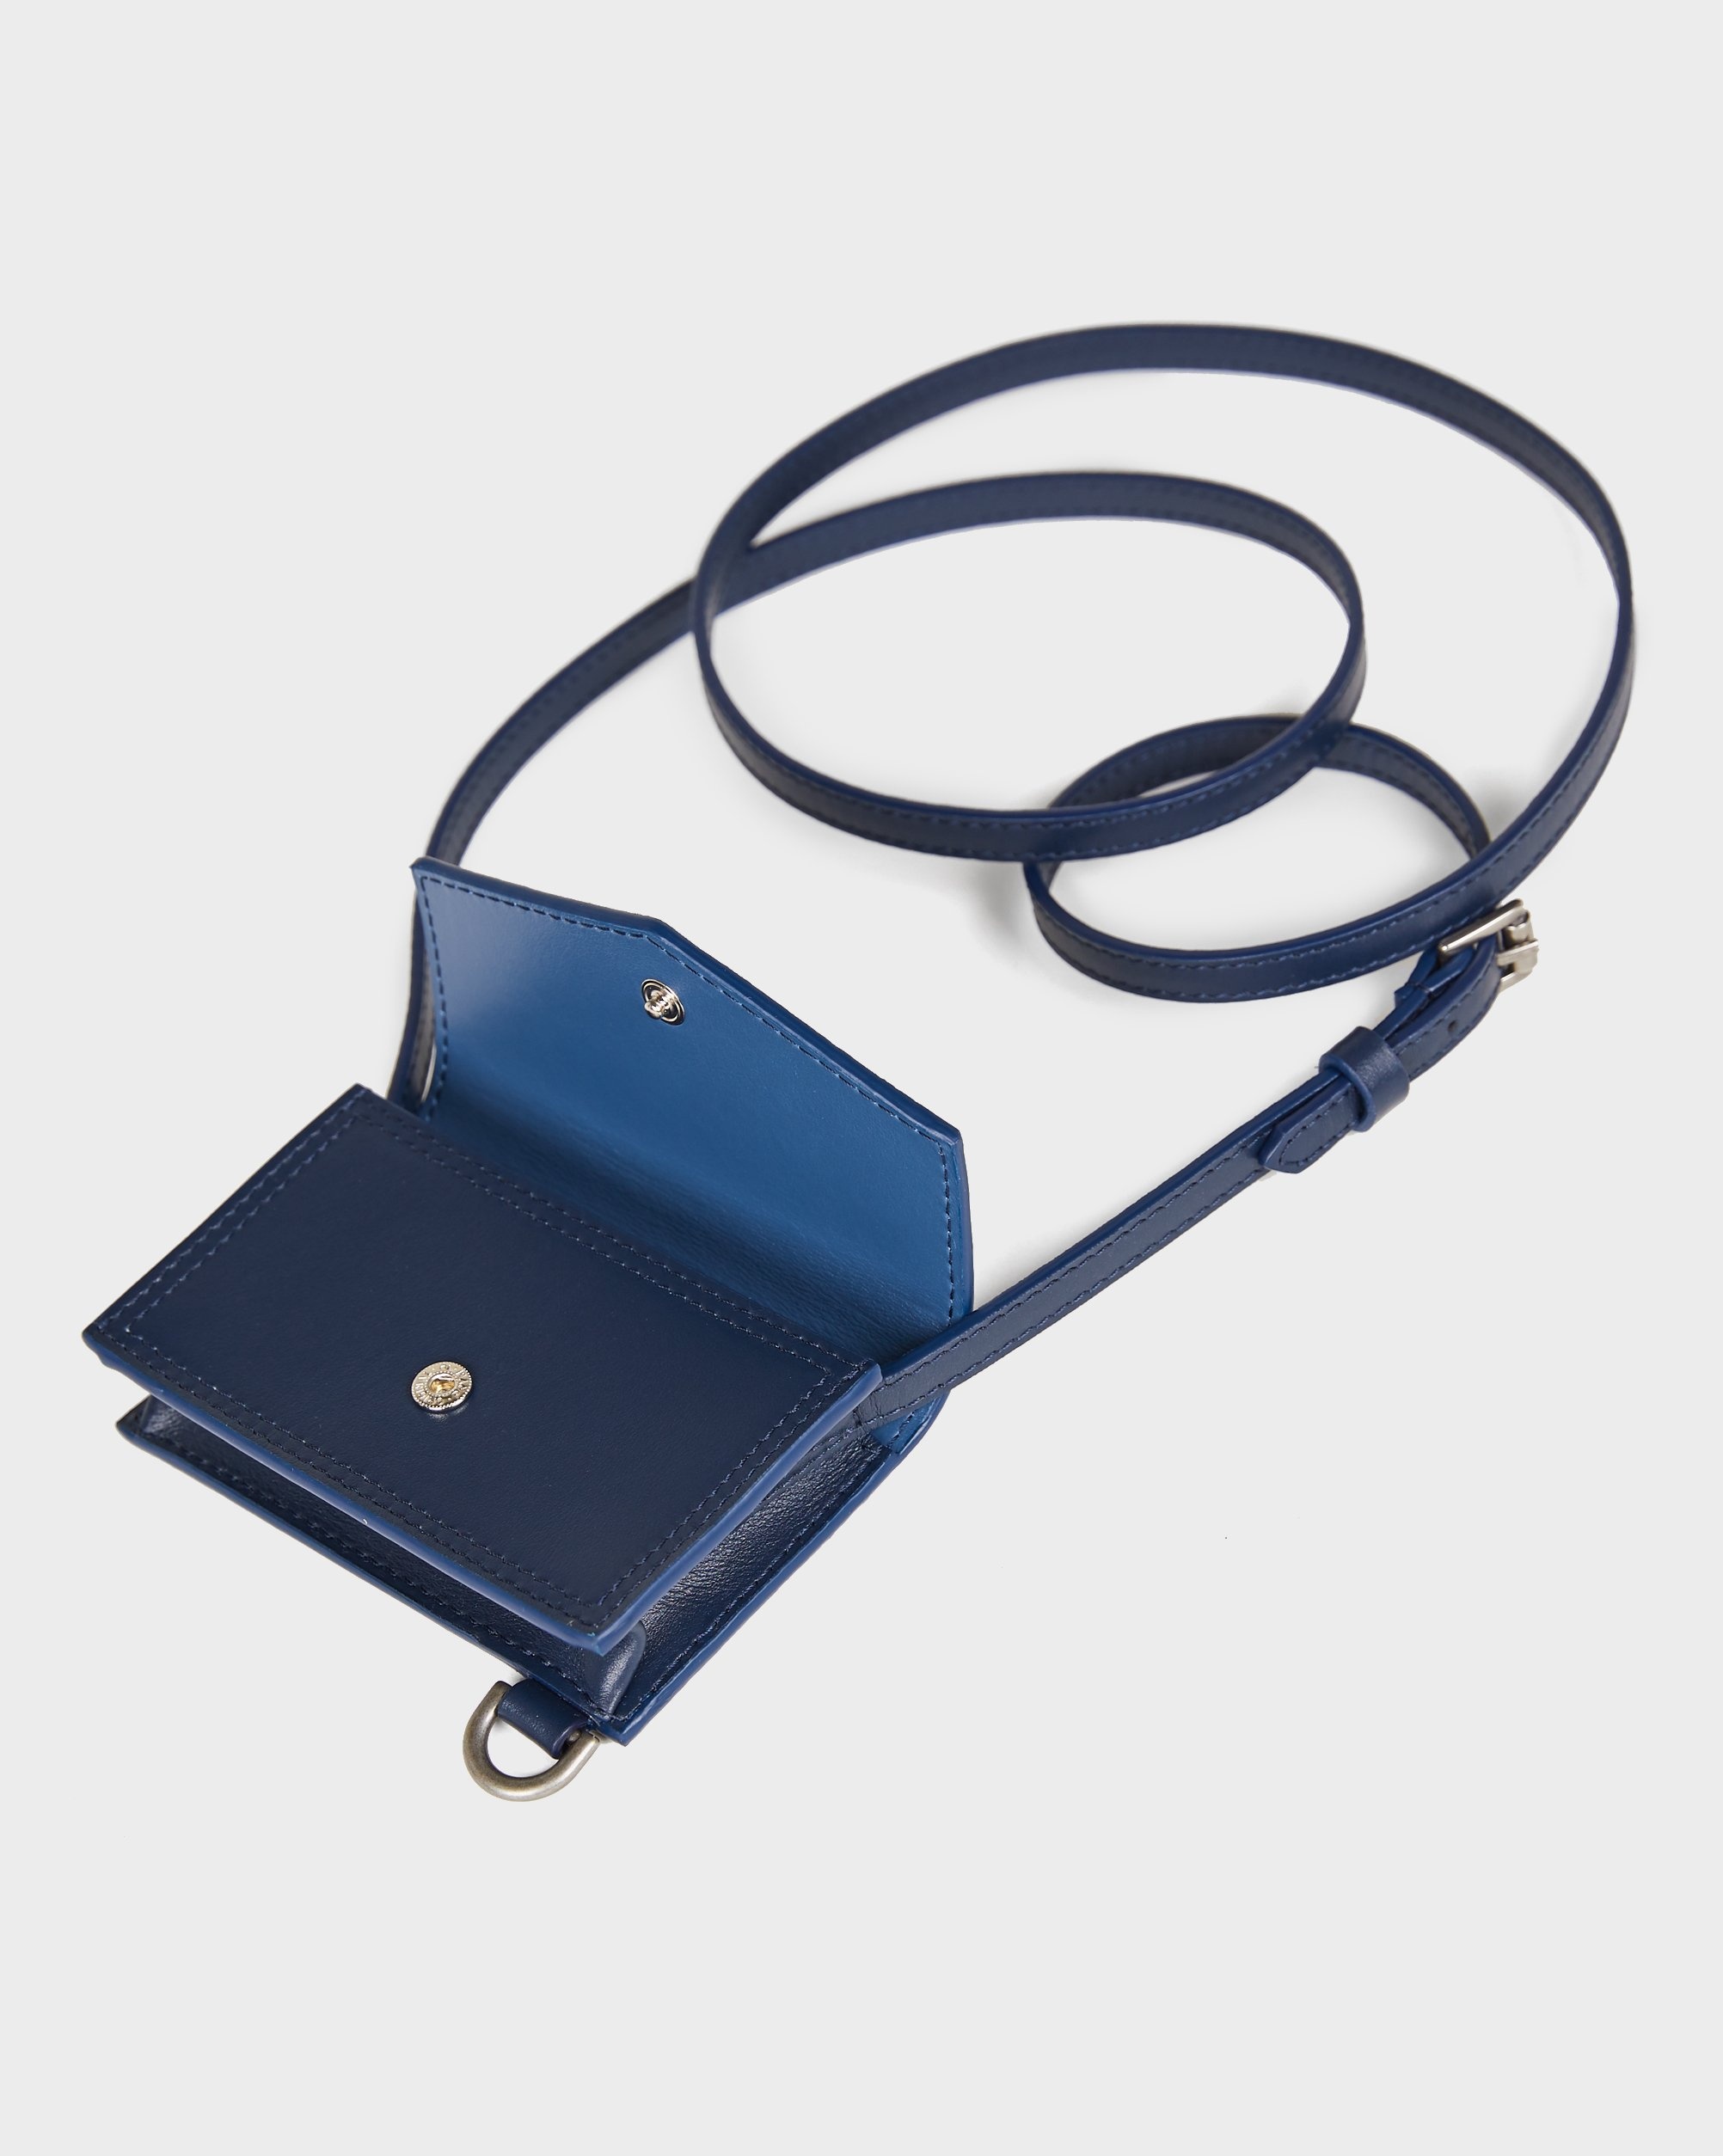 Jacquemus Le Porte Azur Leather Mini Bag